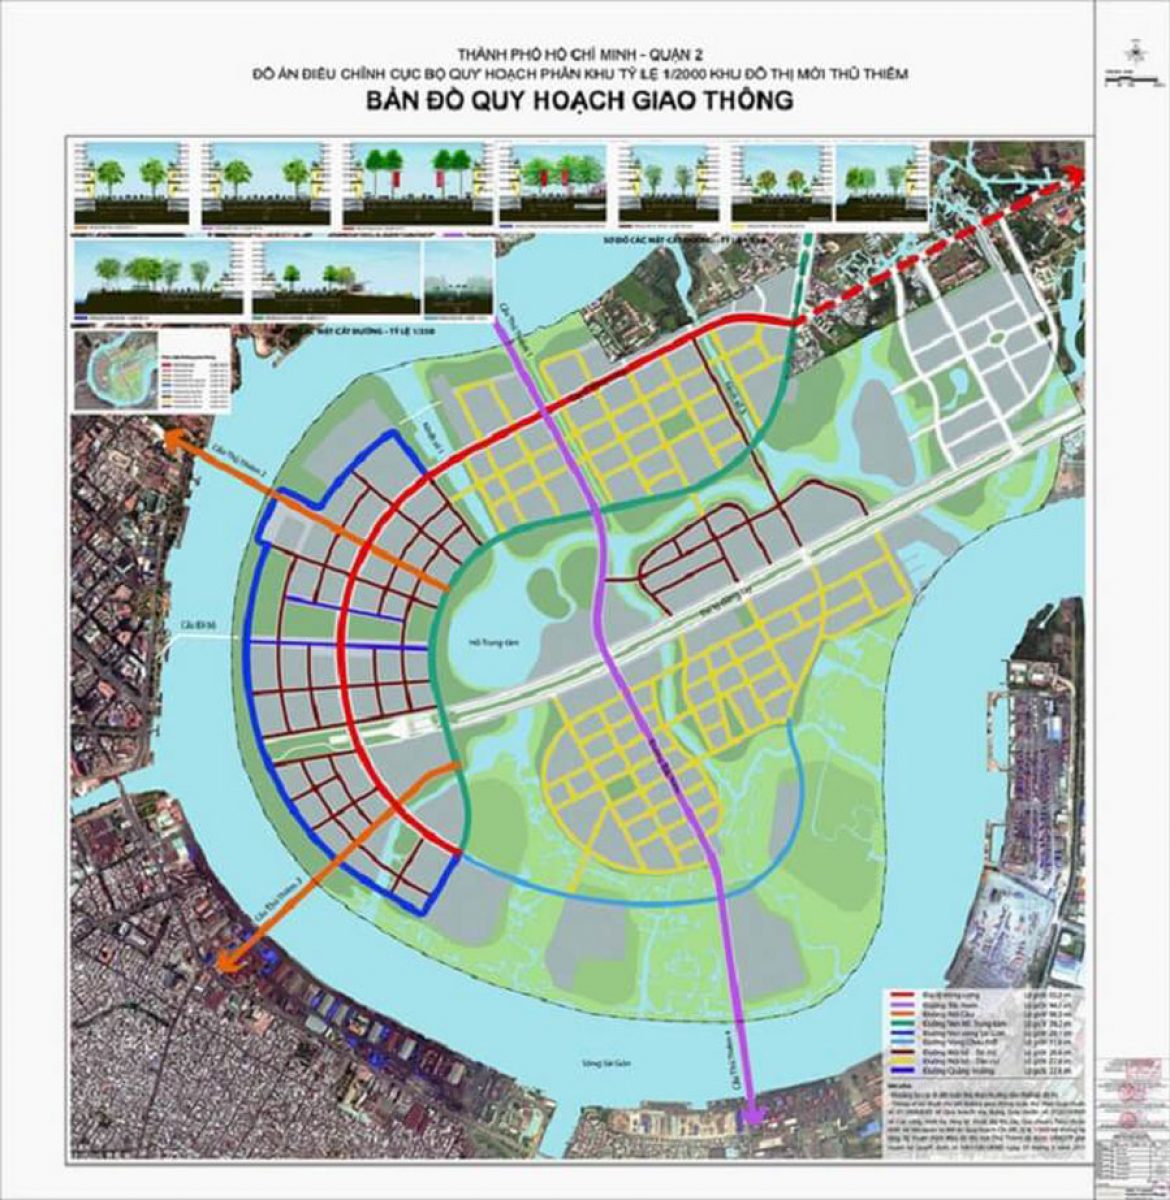 Traffic map of 1 / 2,000 Thu Thiem new urban area 